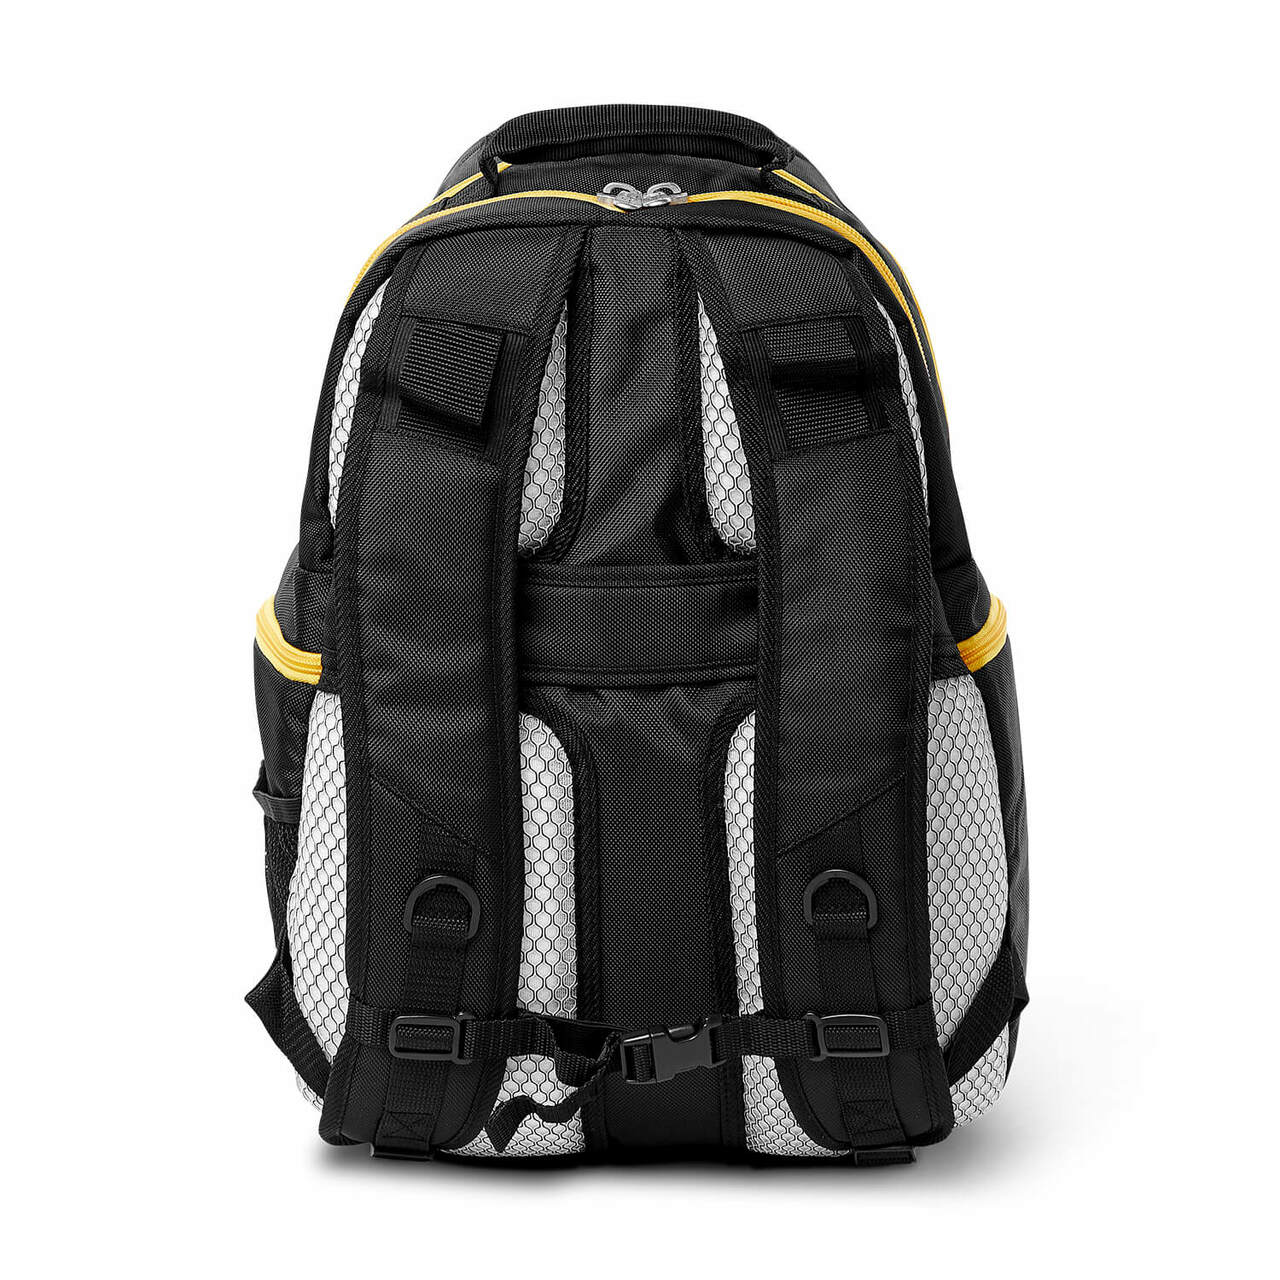 Bears Backpack | Baylor Bears Laptop Backpack